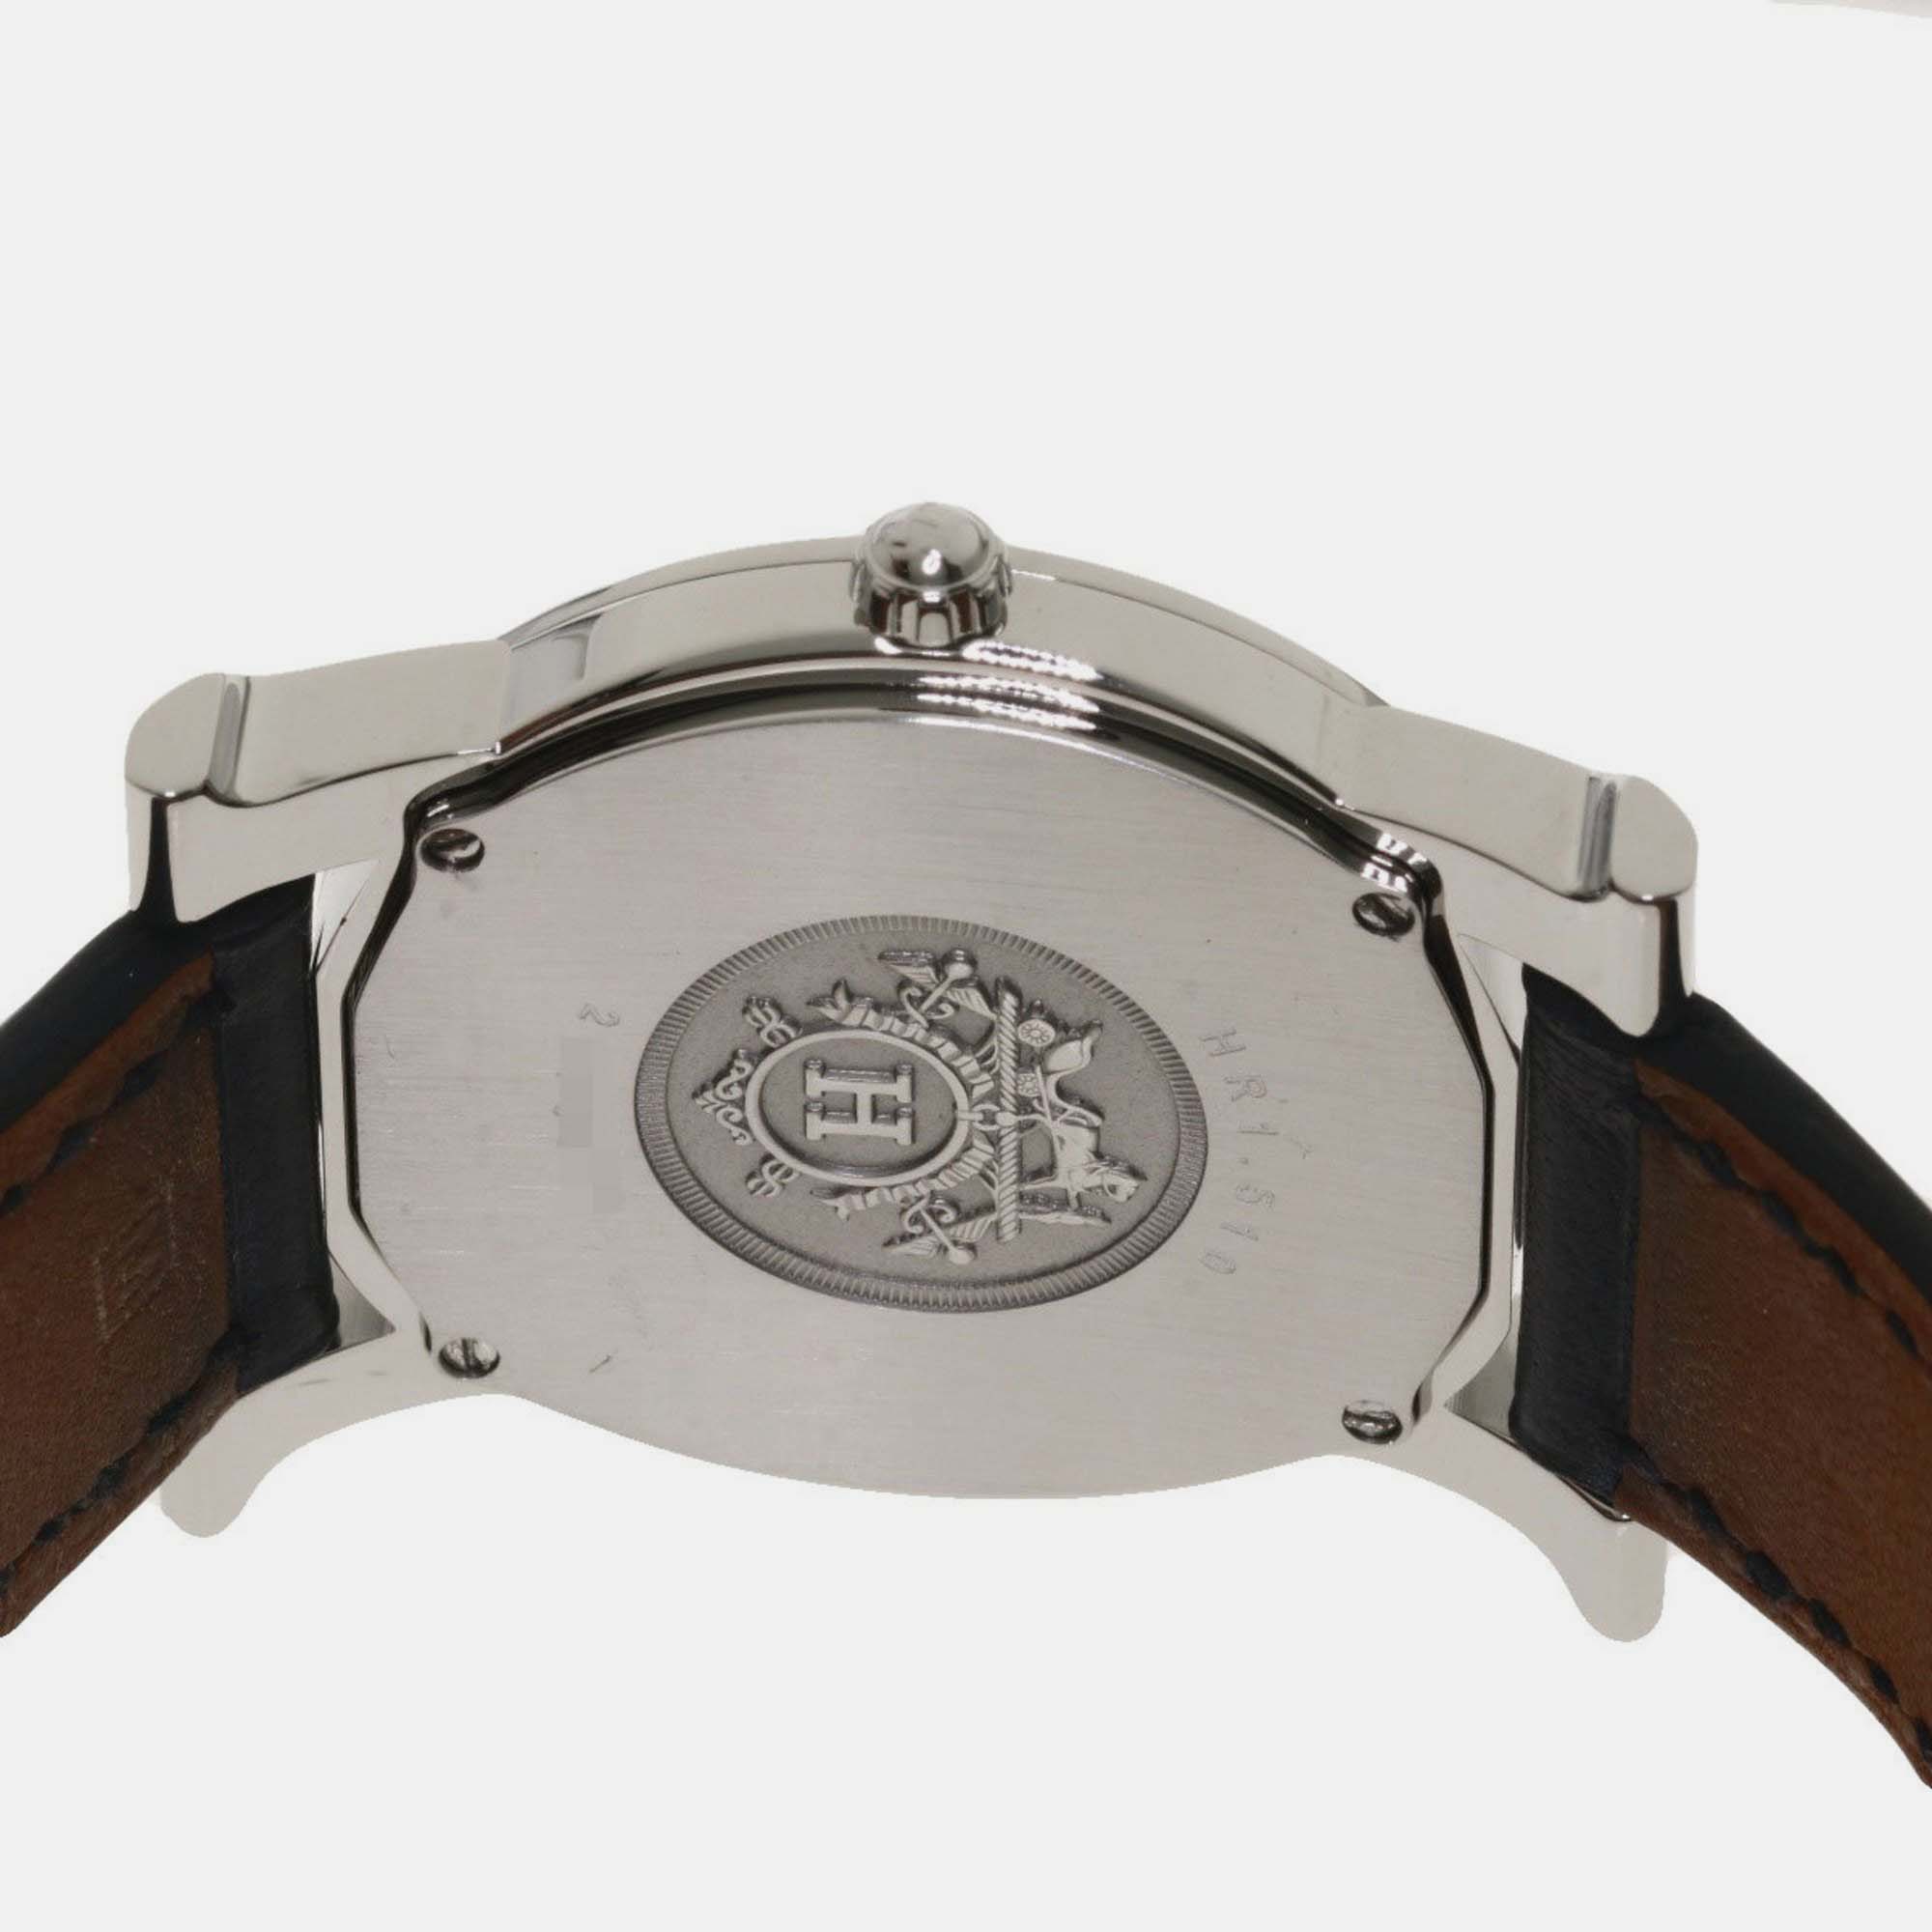 Hermes Black Stainless Steel Heure H HR1.510 Quartz Men's Wristwatch 31 Mm